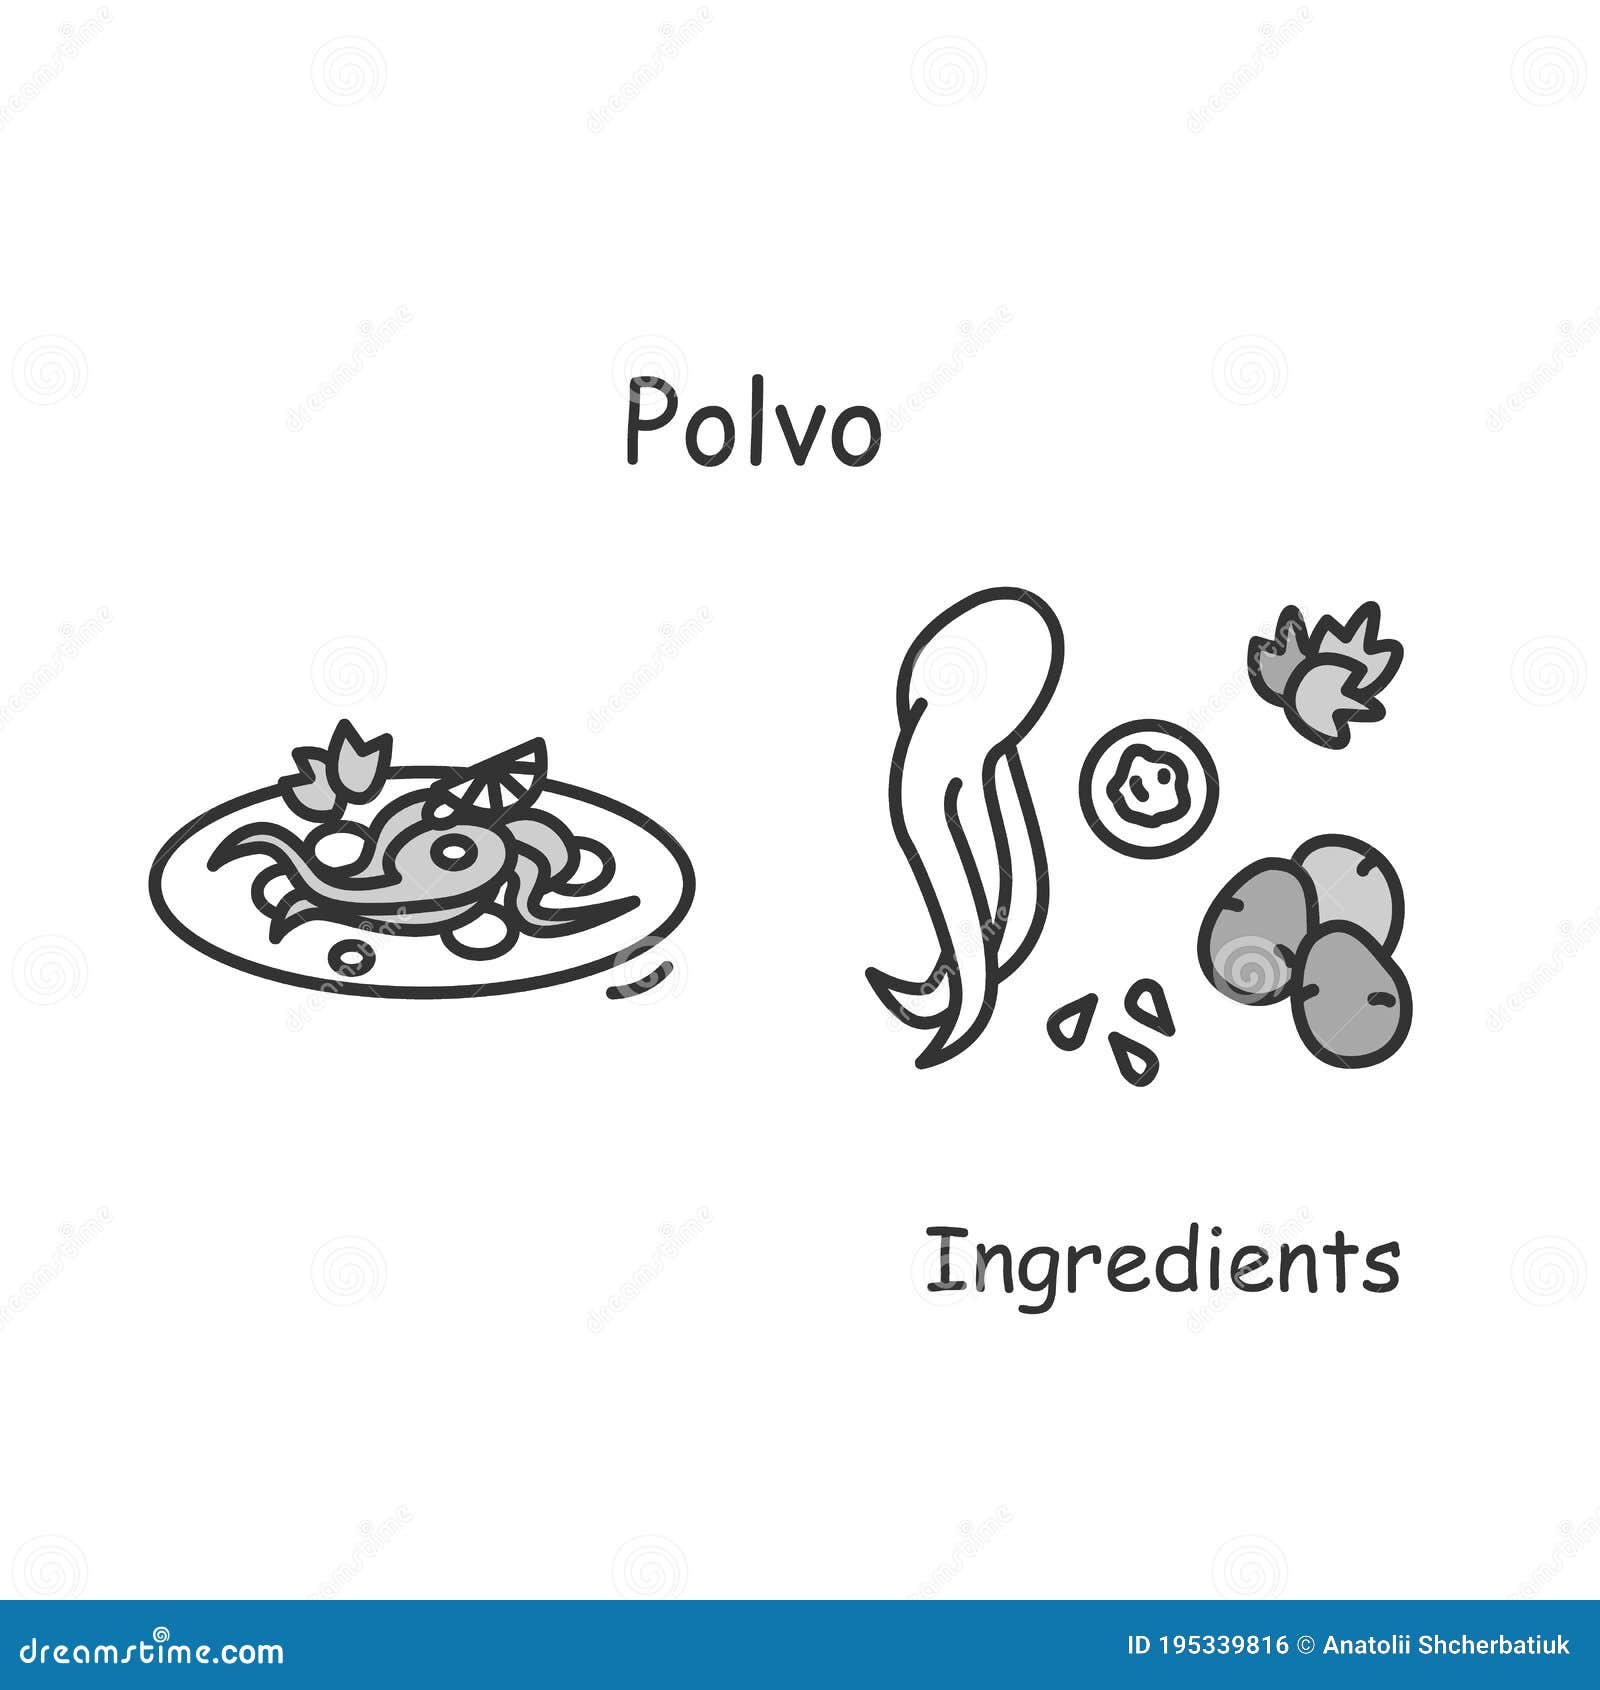 polvo icon. portuguese cuisine recipe squid and vegetables dish serving simple  